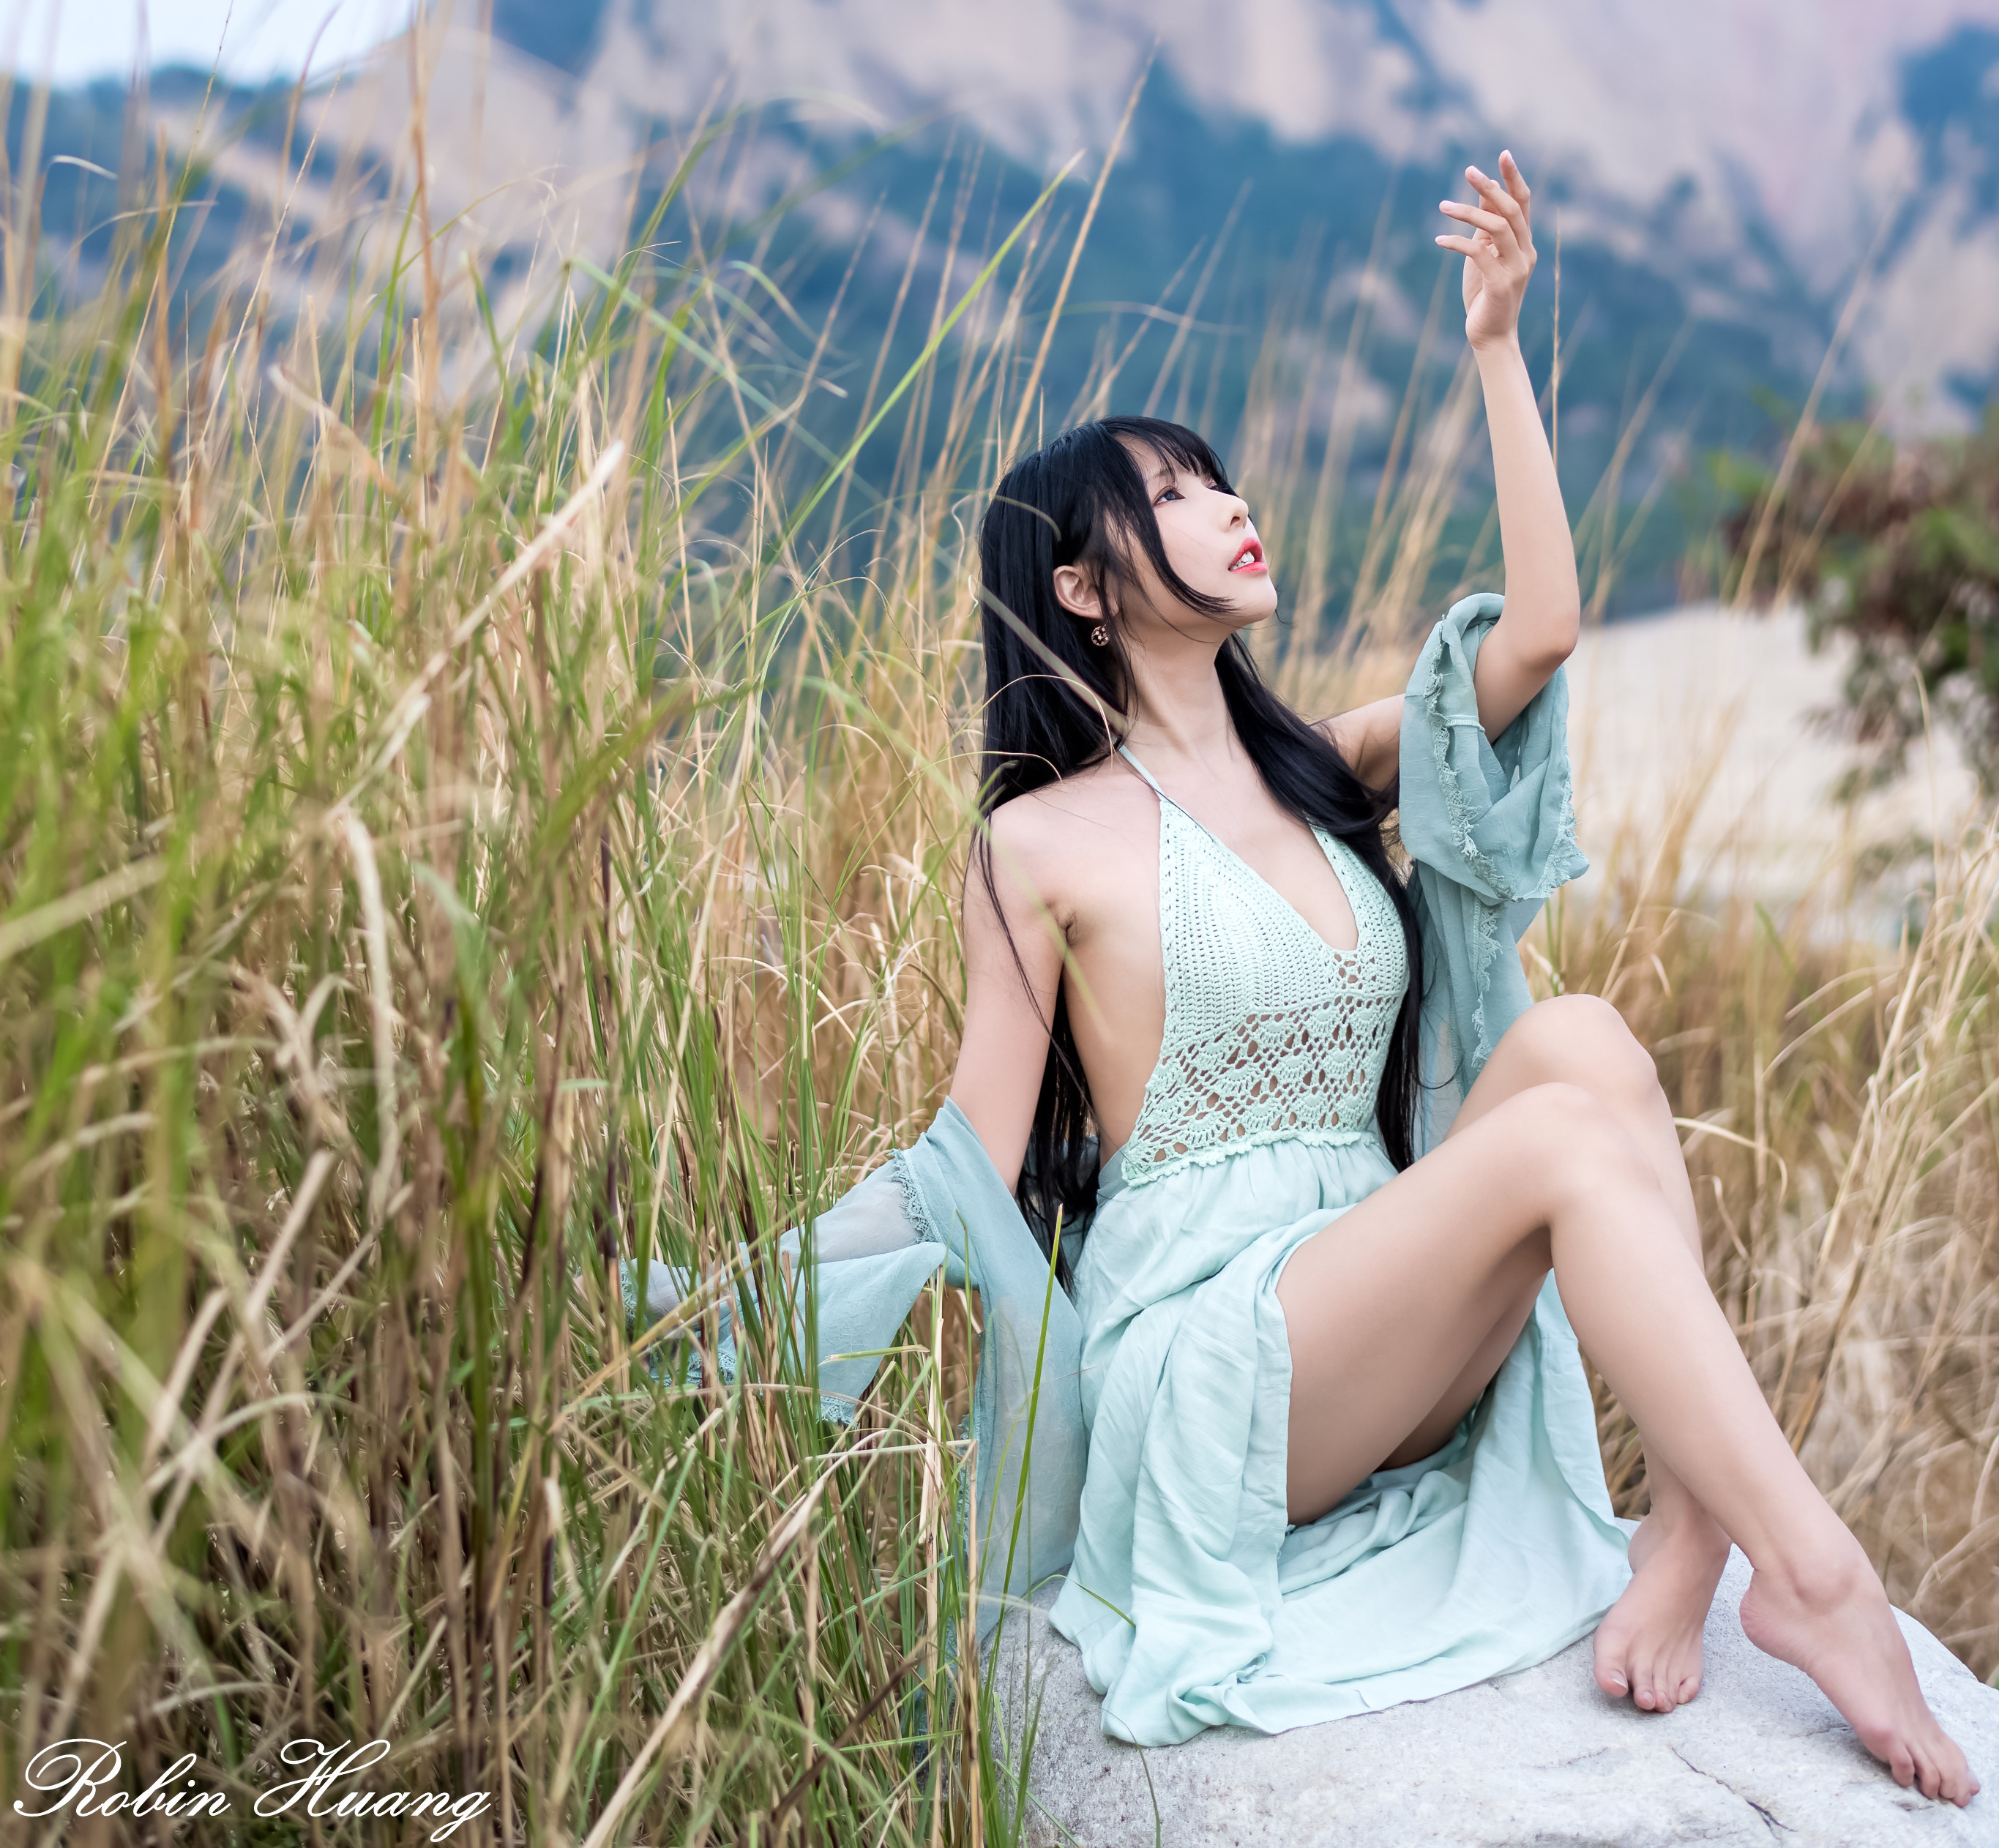 Robin Huang Women Asian Dark Hair Long Hair Dress Blue Clothing Nature Grass Legs Barefoot Vicky Asi 2731x2525